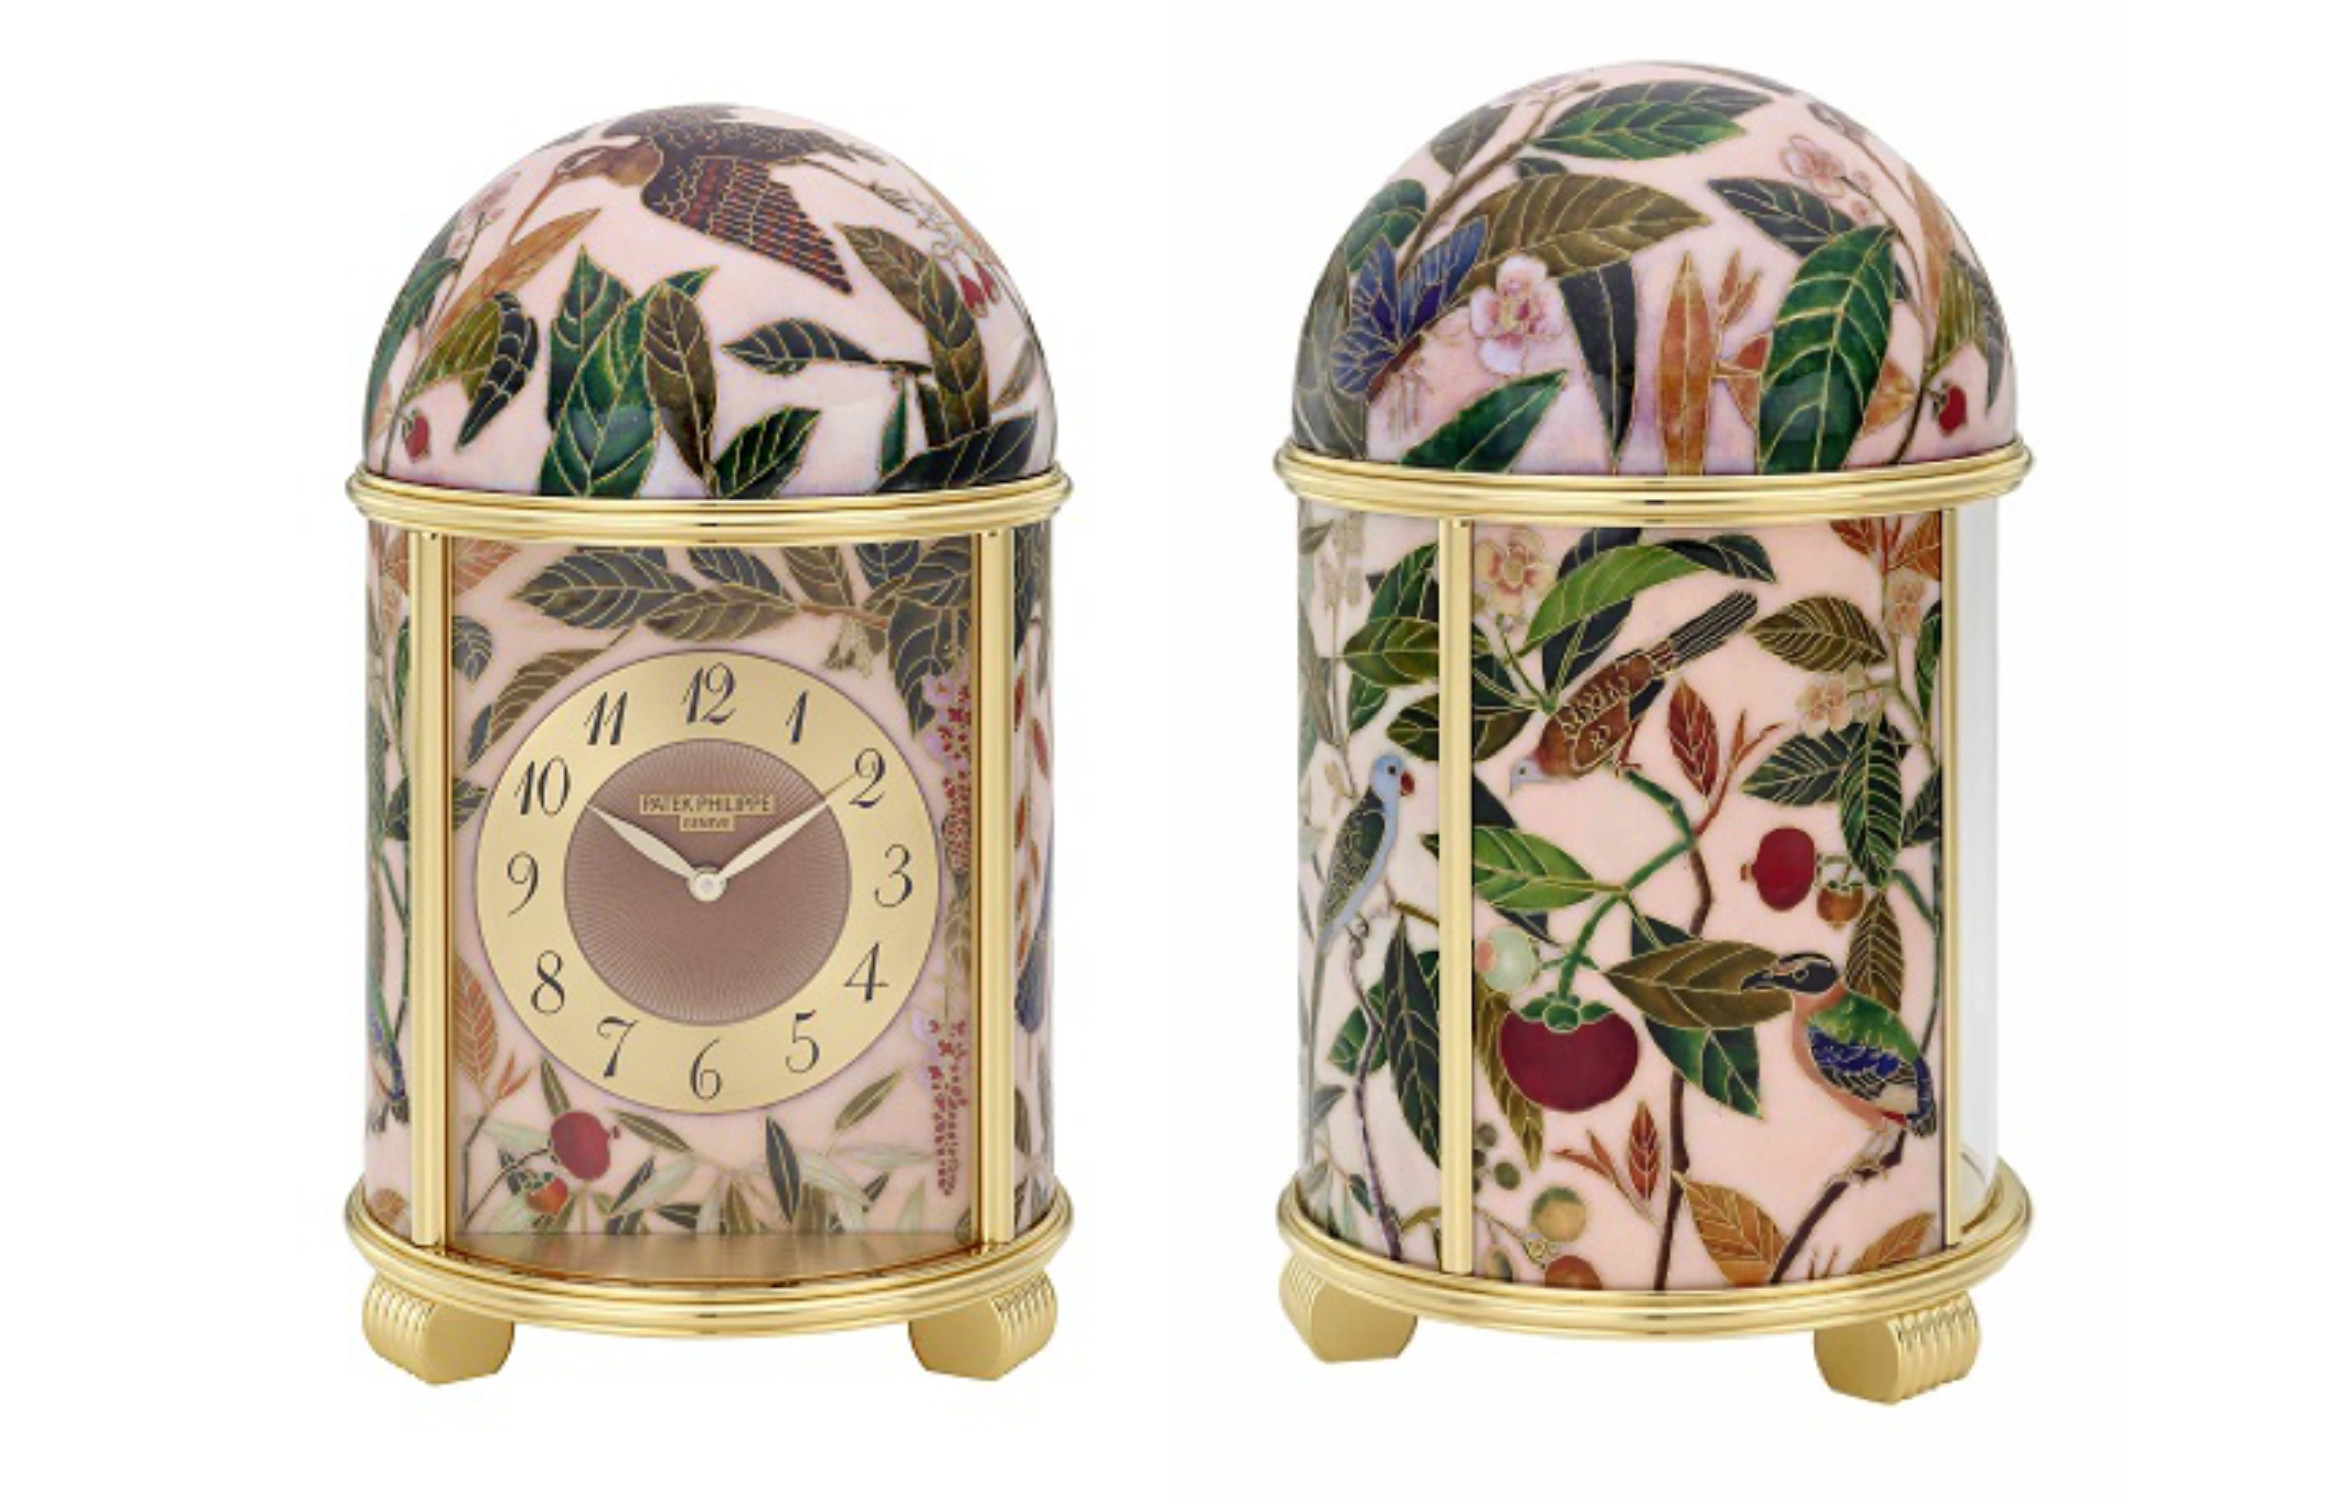 Patek Philippe “Farquhar Collection” dome table clock นาฬิกาตั้งโต๊ะทรงโดม Patek Philippe “Farquhar Collection”